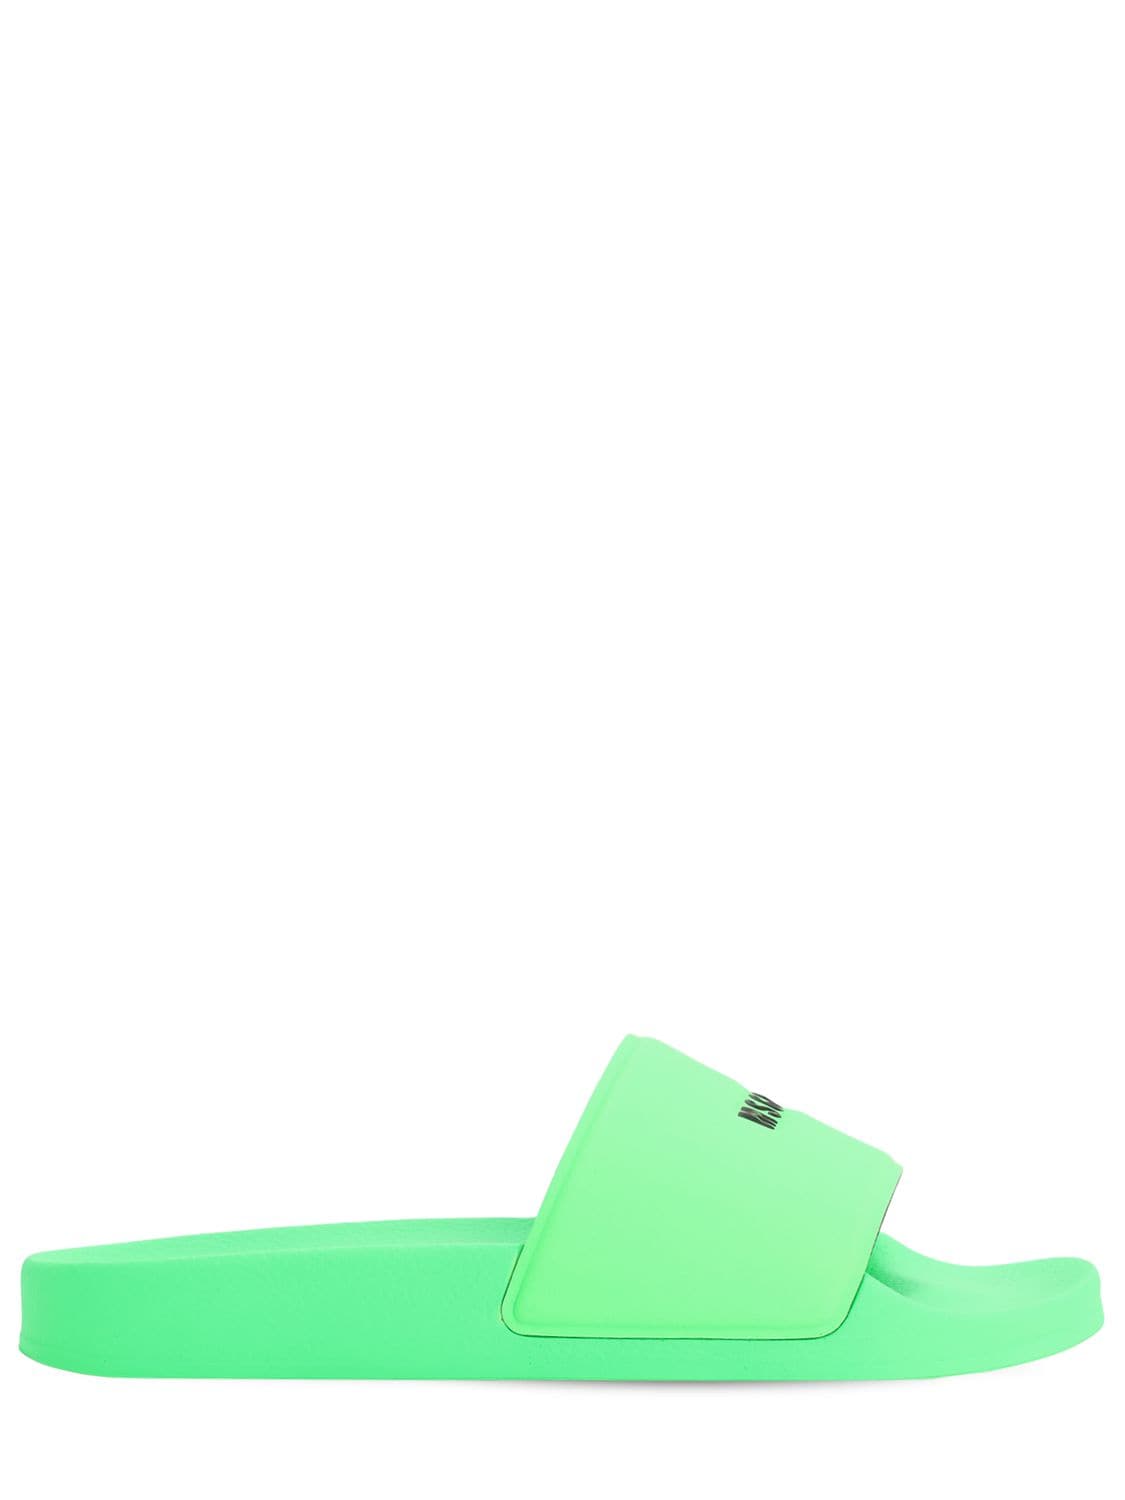 Msgm Logo Tech Slide Sandals In Neon Green